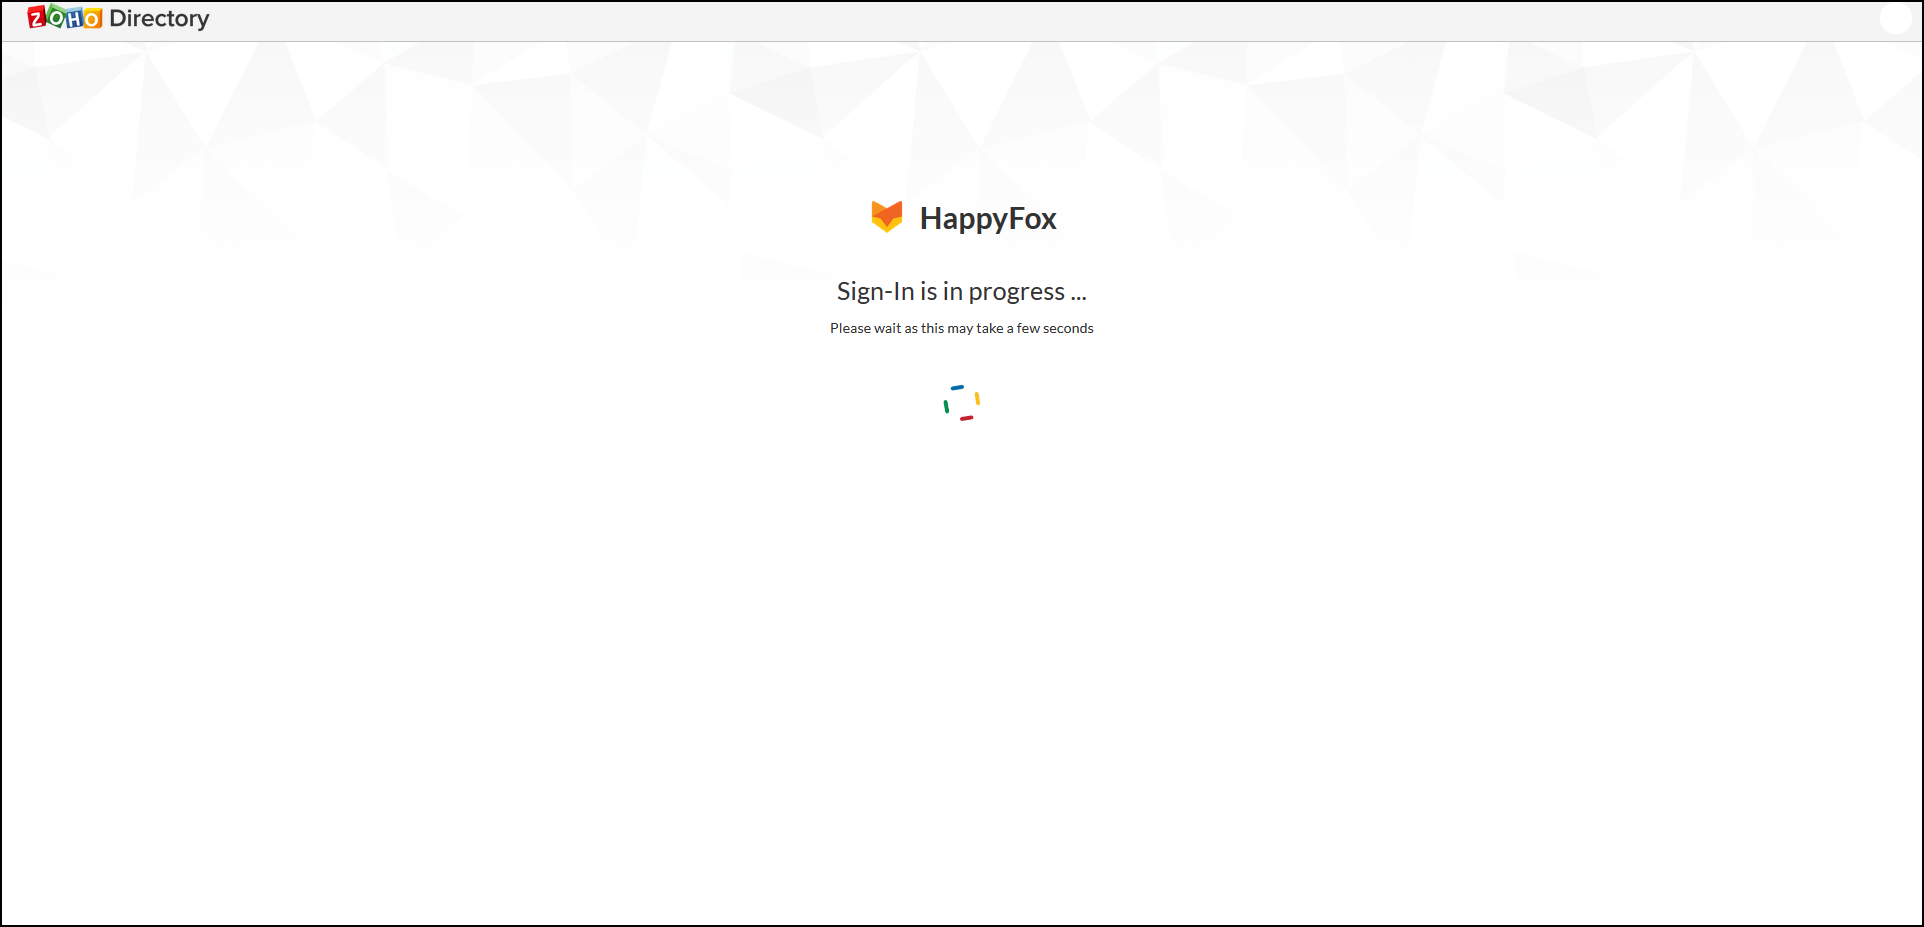 SSO Signing into HappyFox app